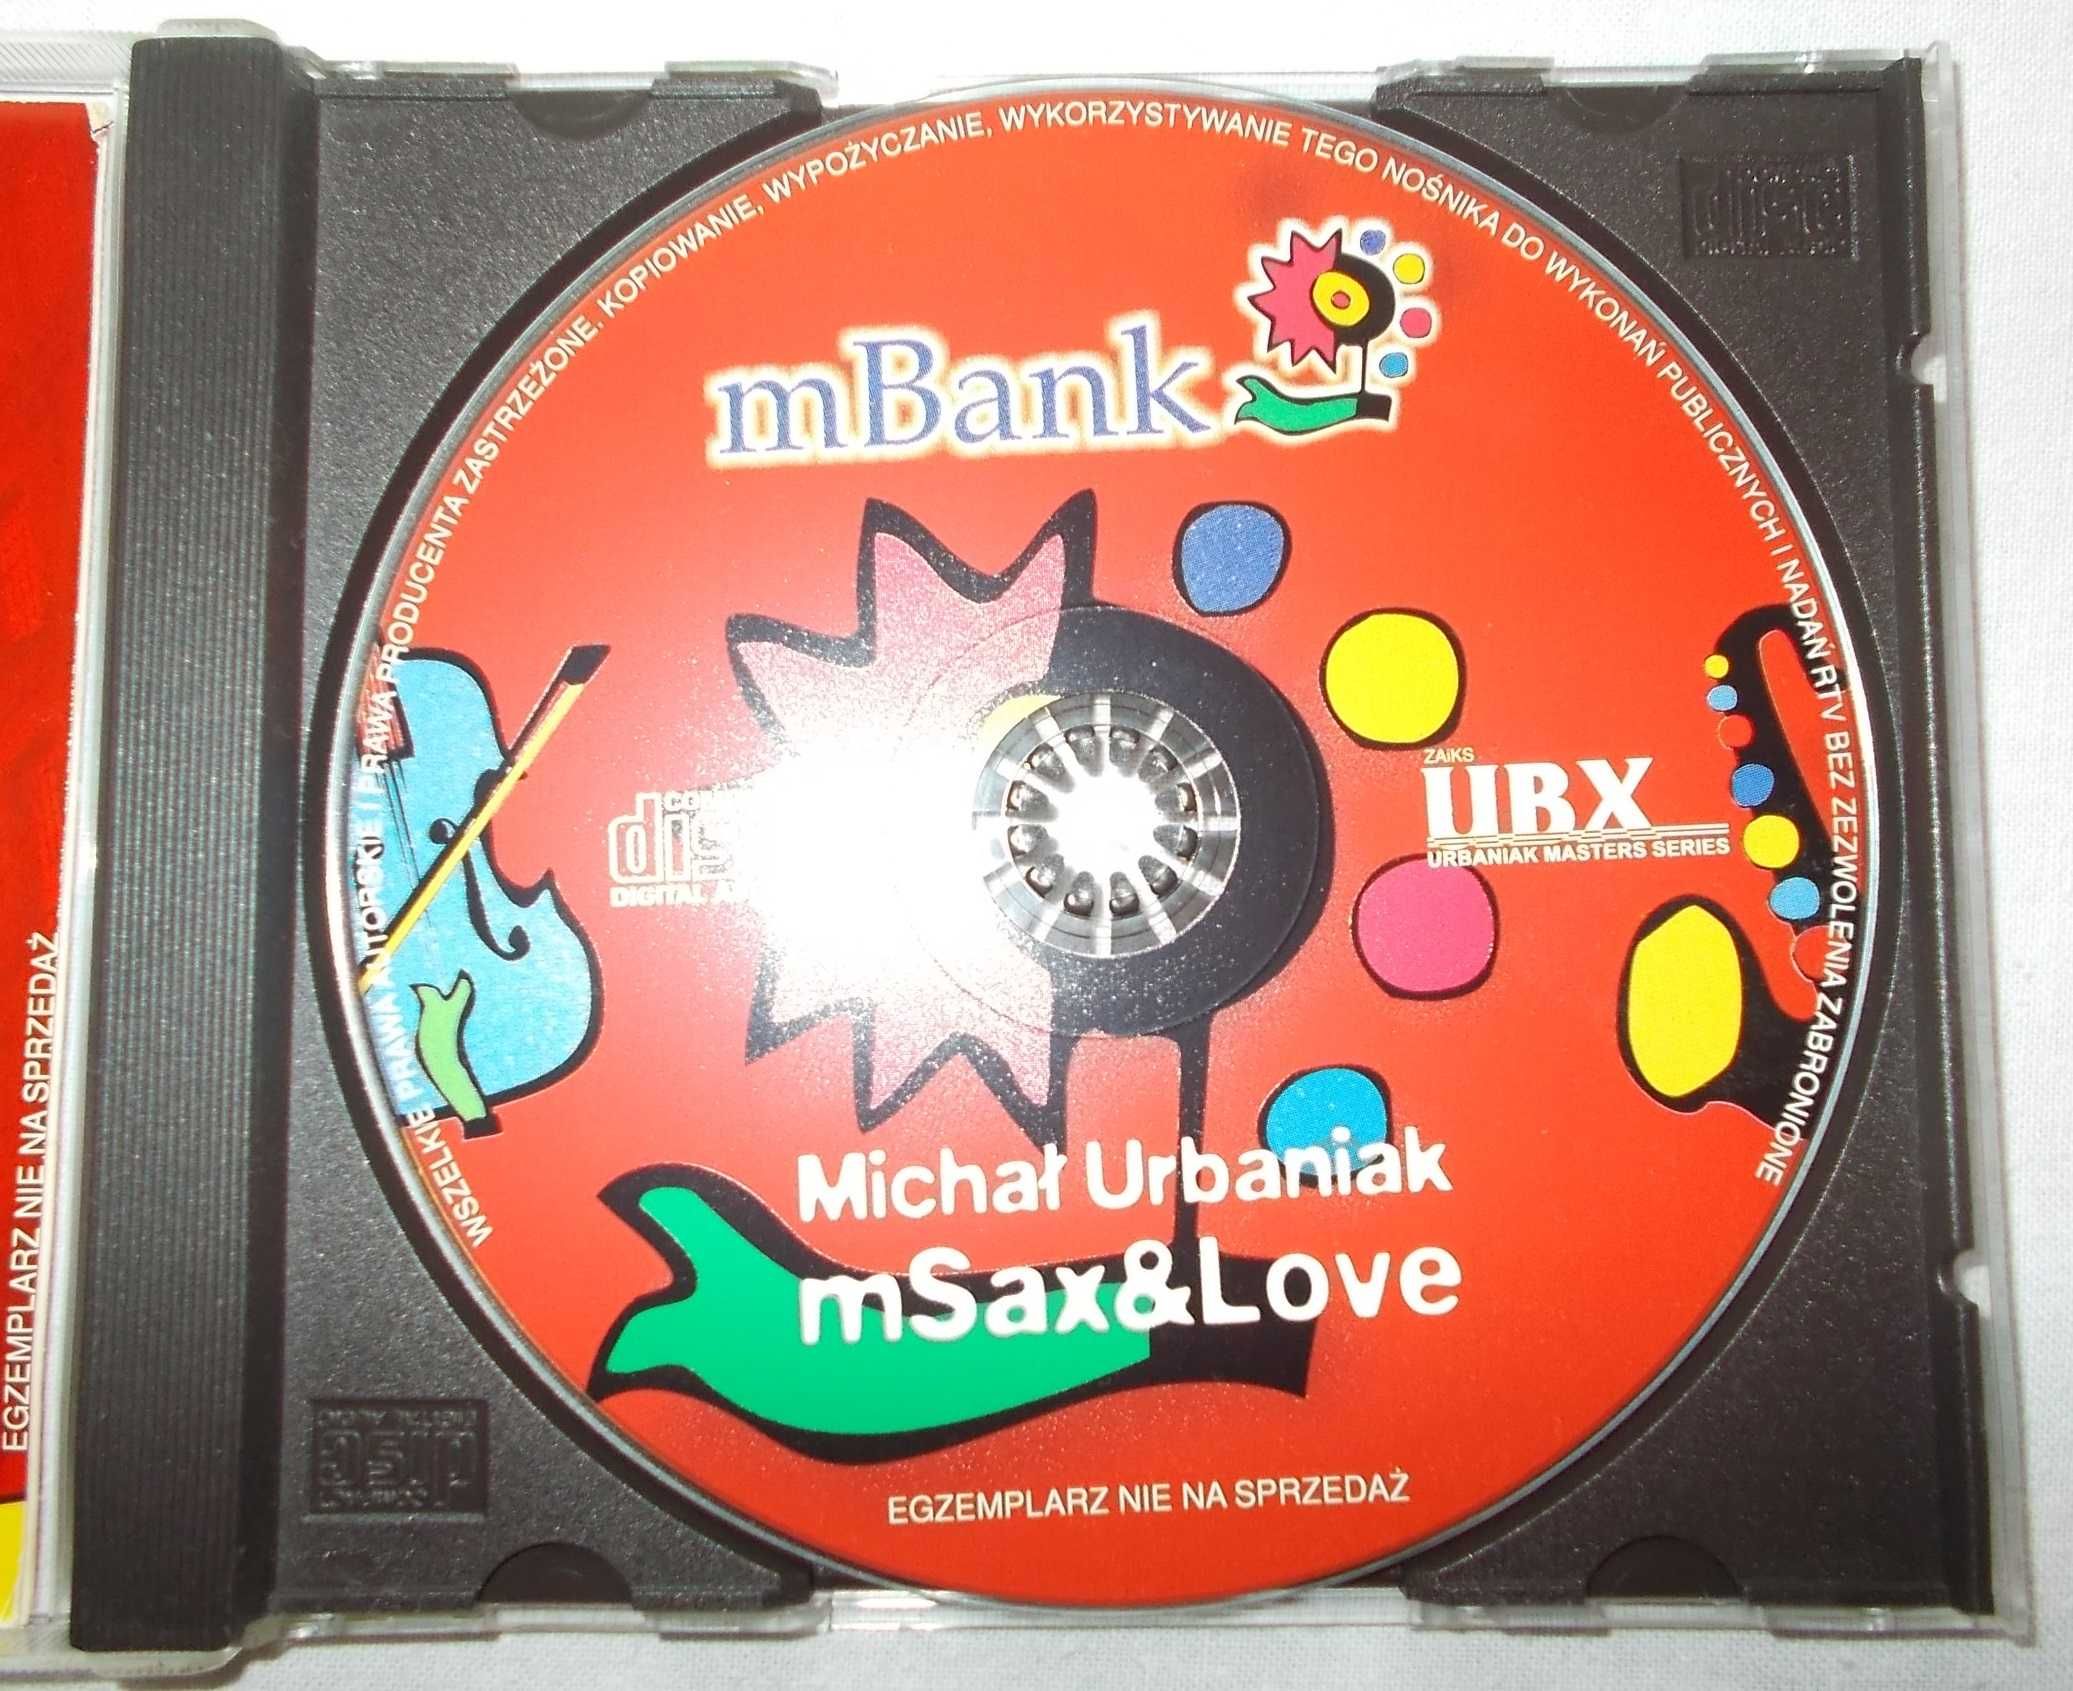 Płyta CD - Michał Urbaniak - mSax&Love - (2002r.)